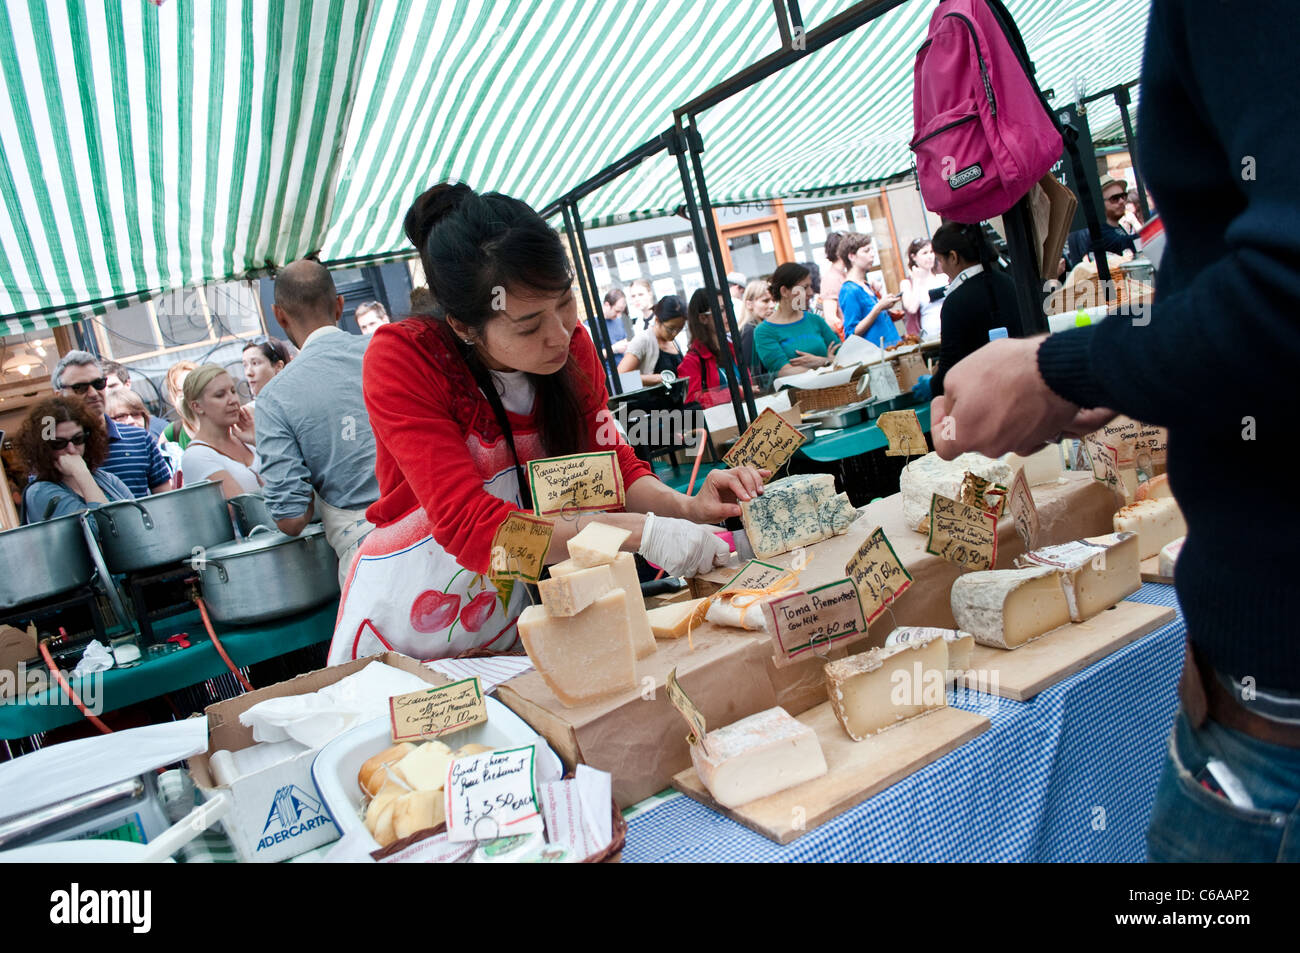 Woman trader cutting cheese, Broadway Market, Hackney, London, UK Stock Photo